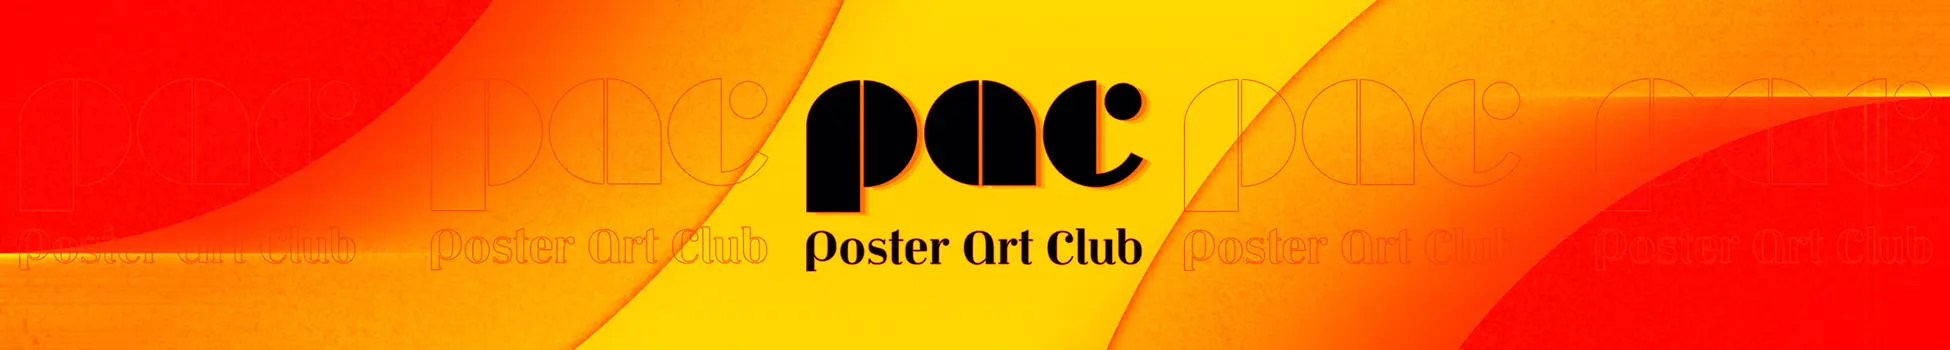 PAC - Poster Art Club Header